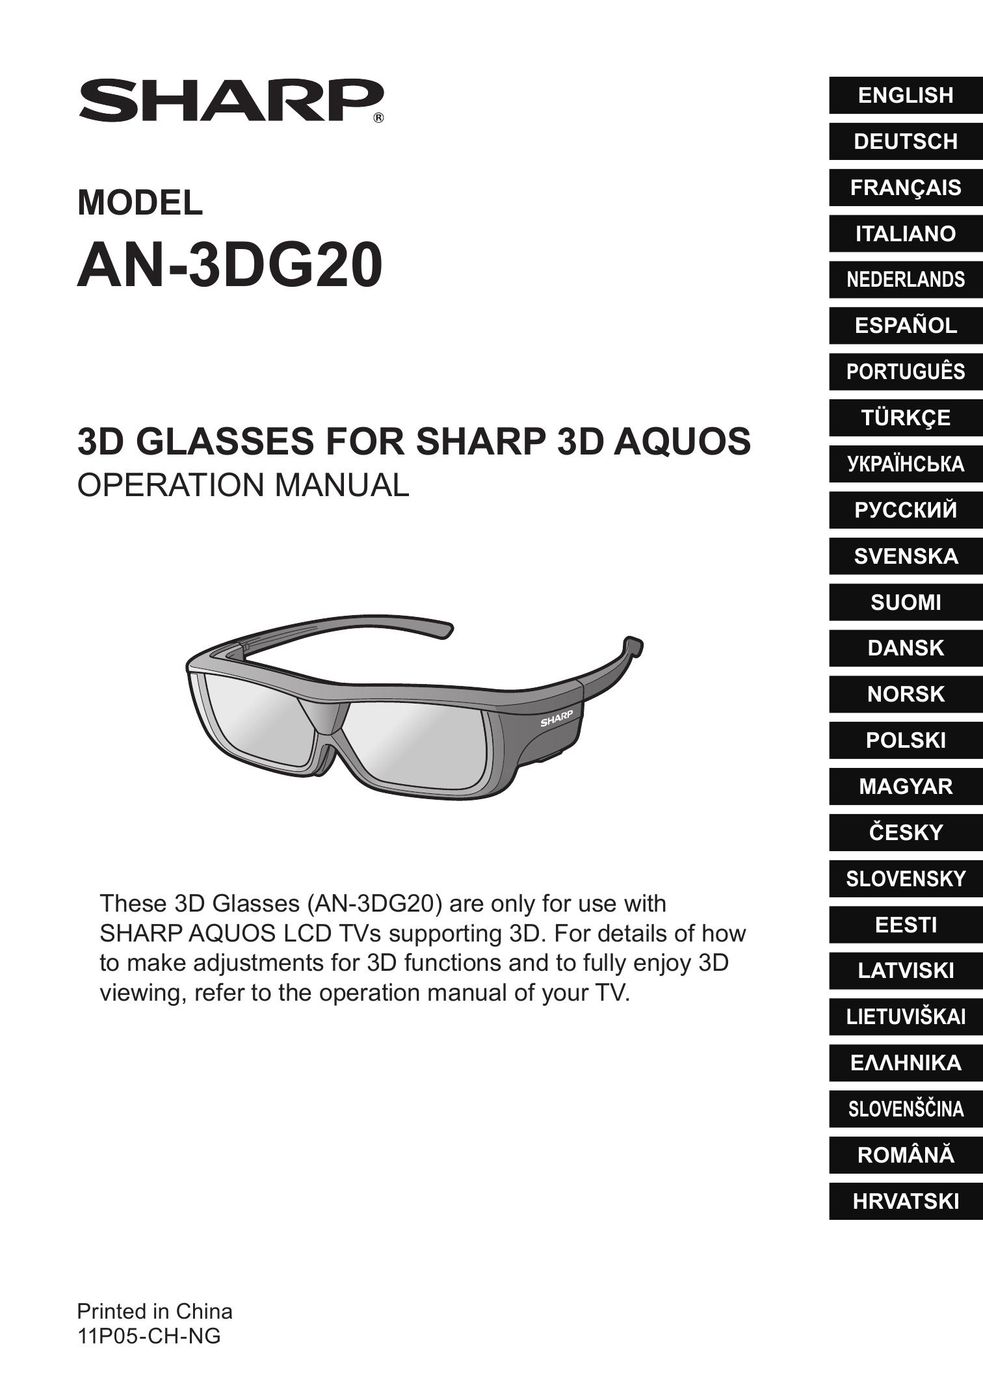 Sharp AN-3DG20 Binoculars User Manual